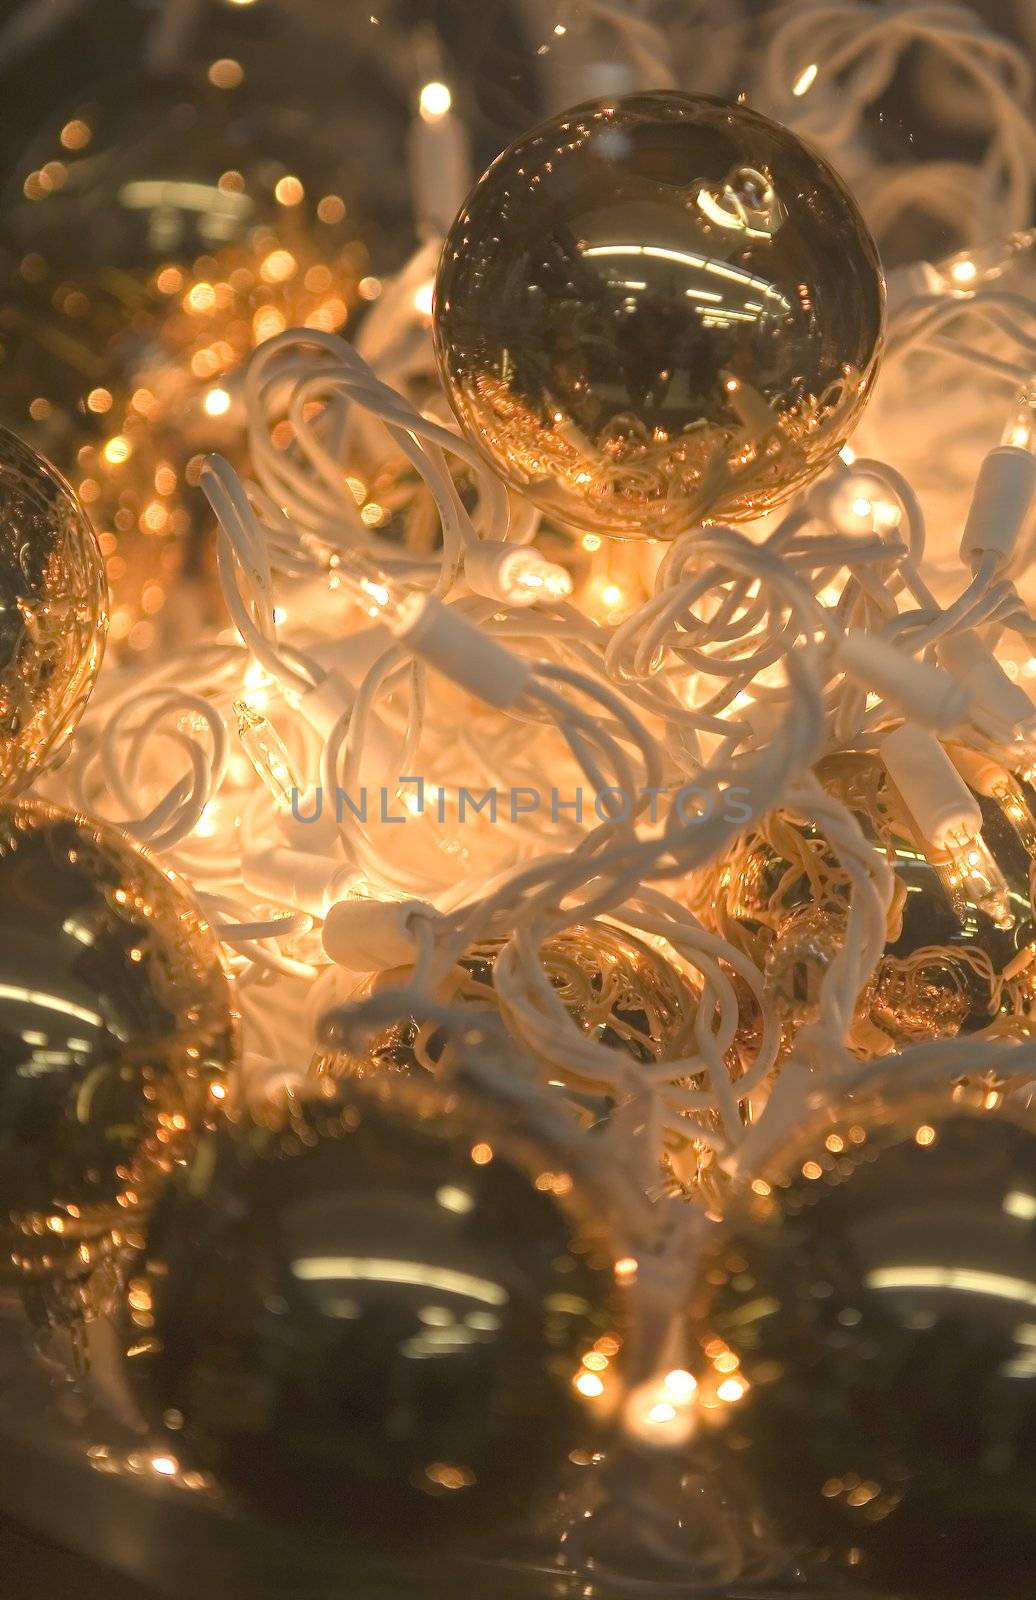 Christmas Balls laying on a string of Lights at the Holiday Season.